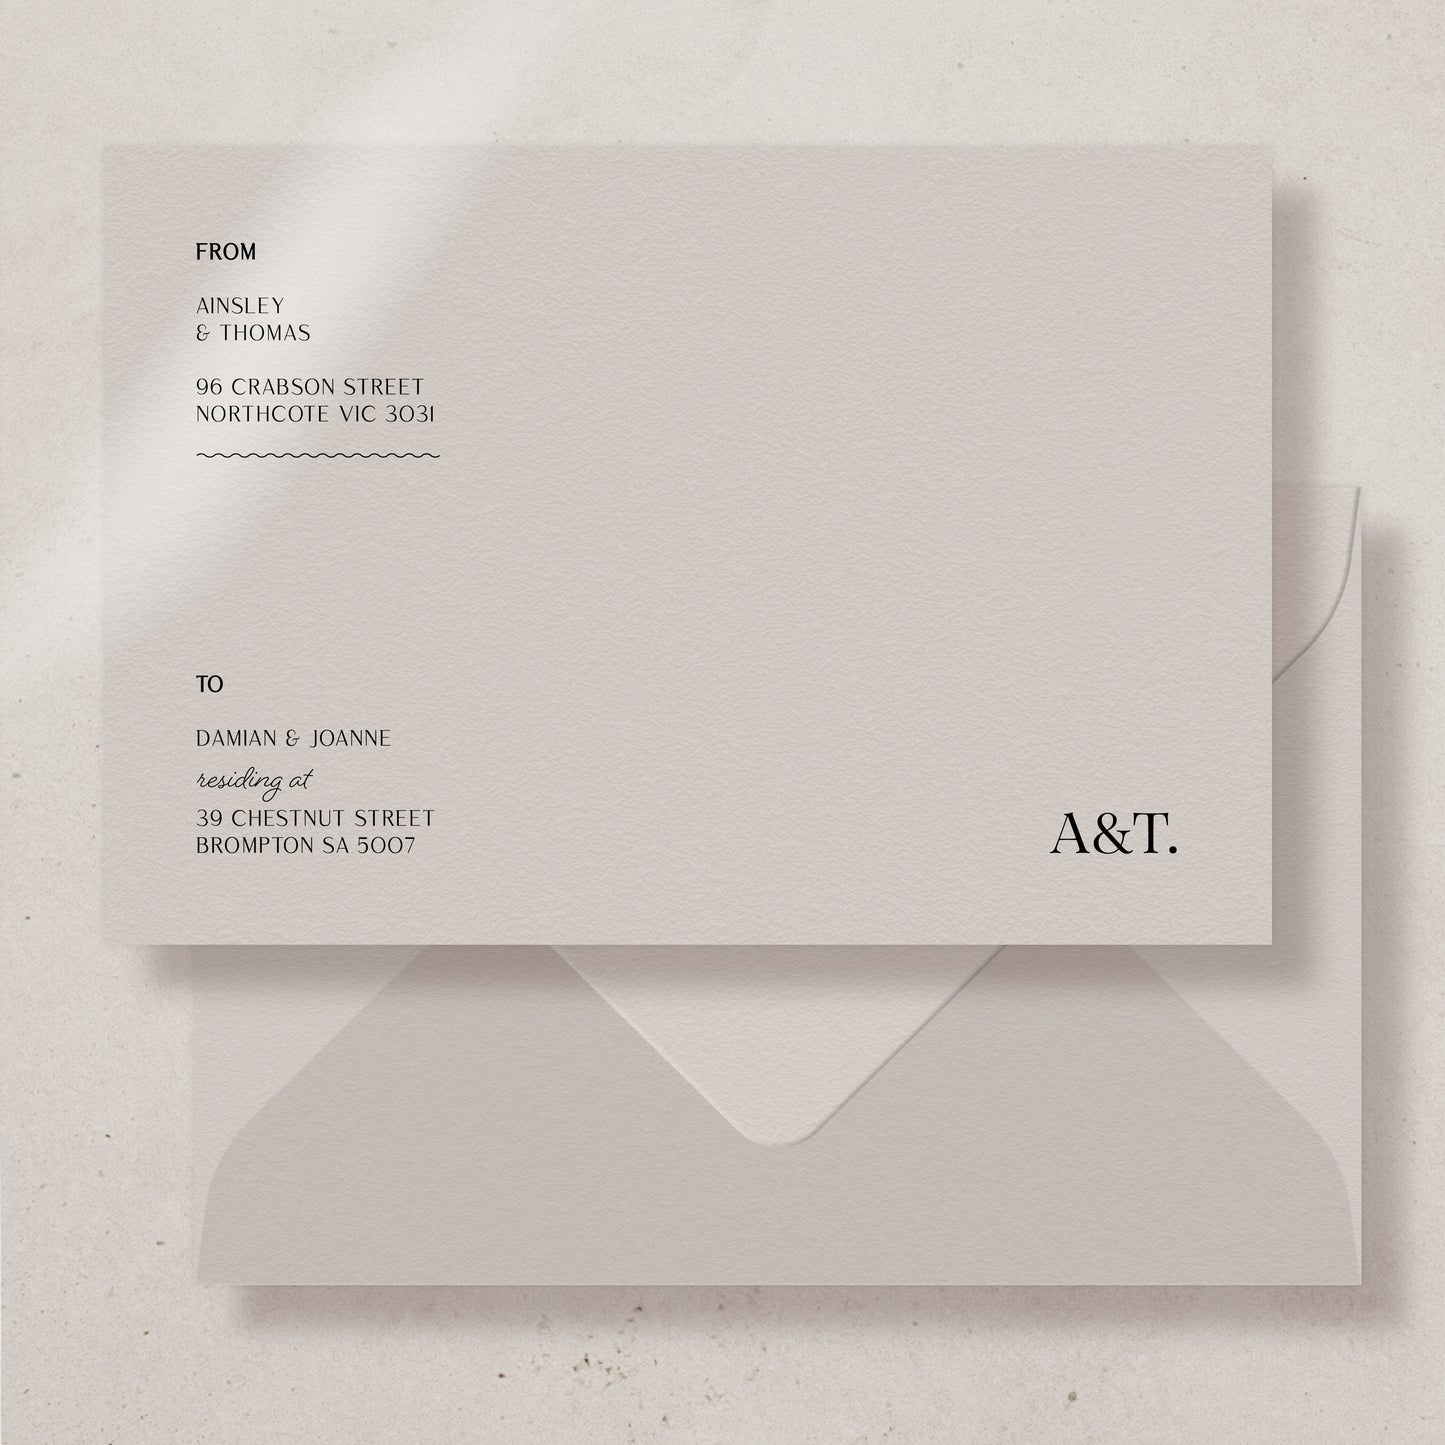 Ainsley Invitation Envelope